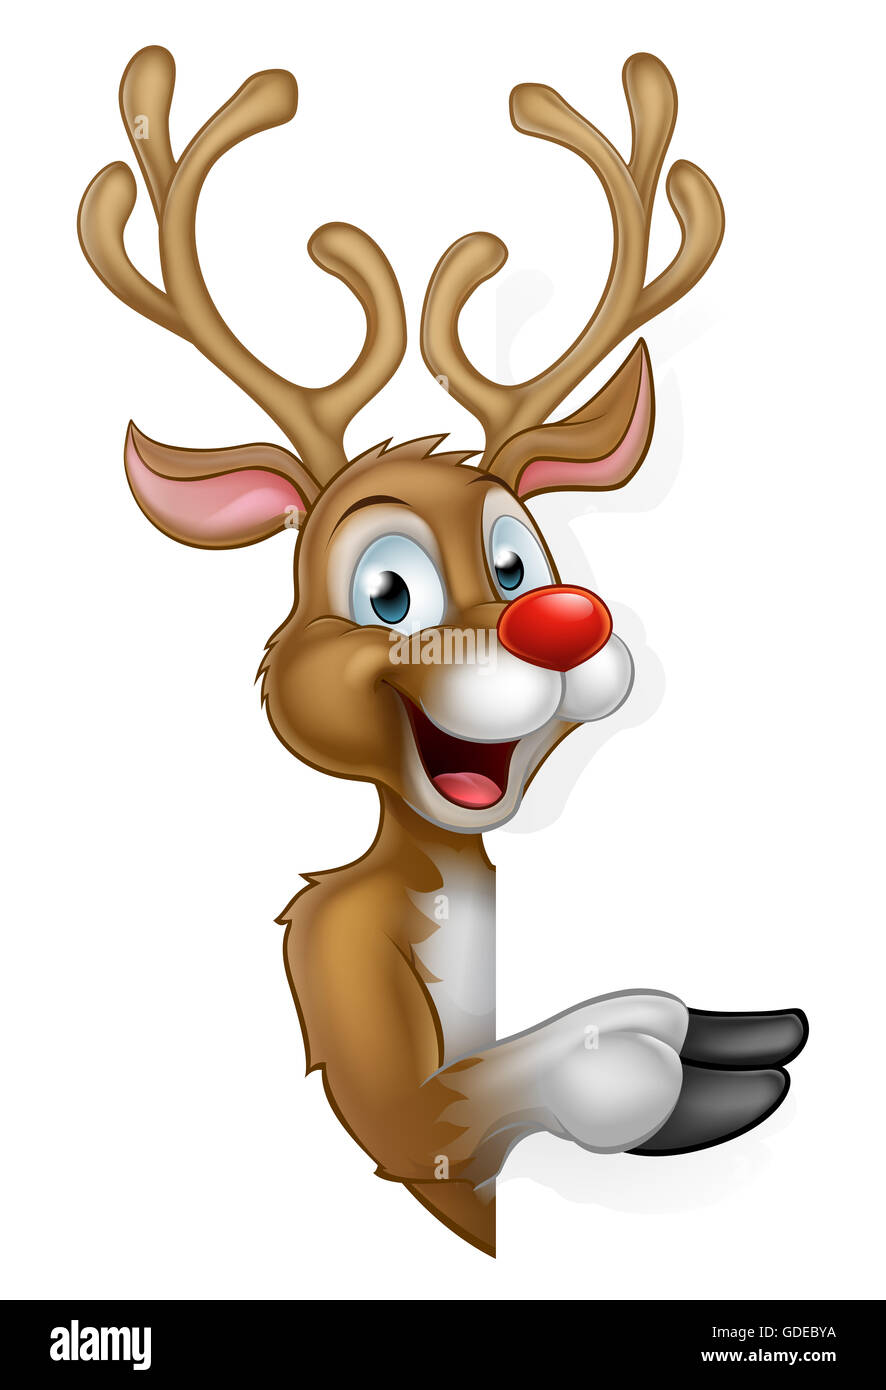 cartoon clipart reindeer